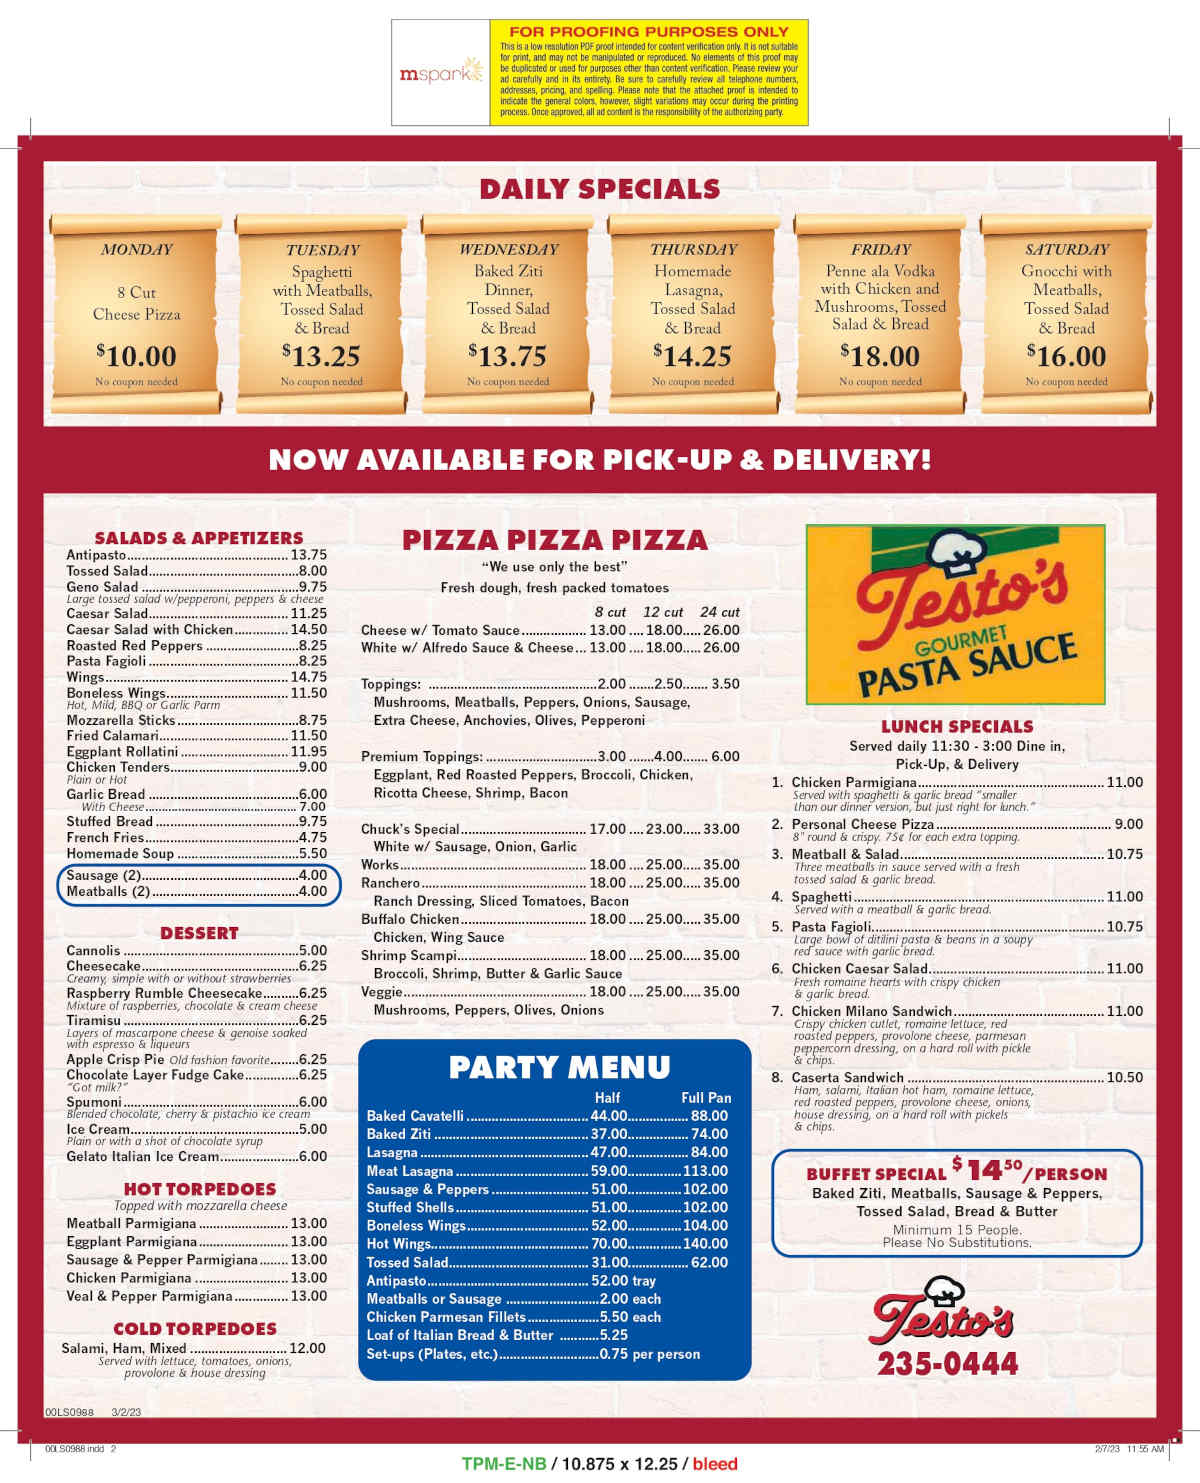 Testo's restaurant pickup menu page 2 